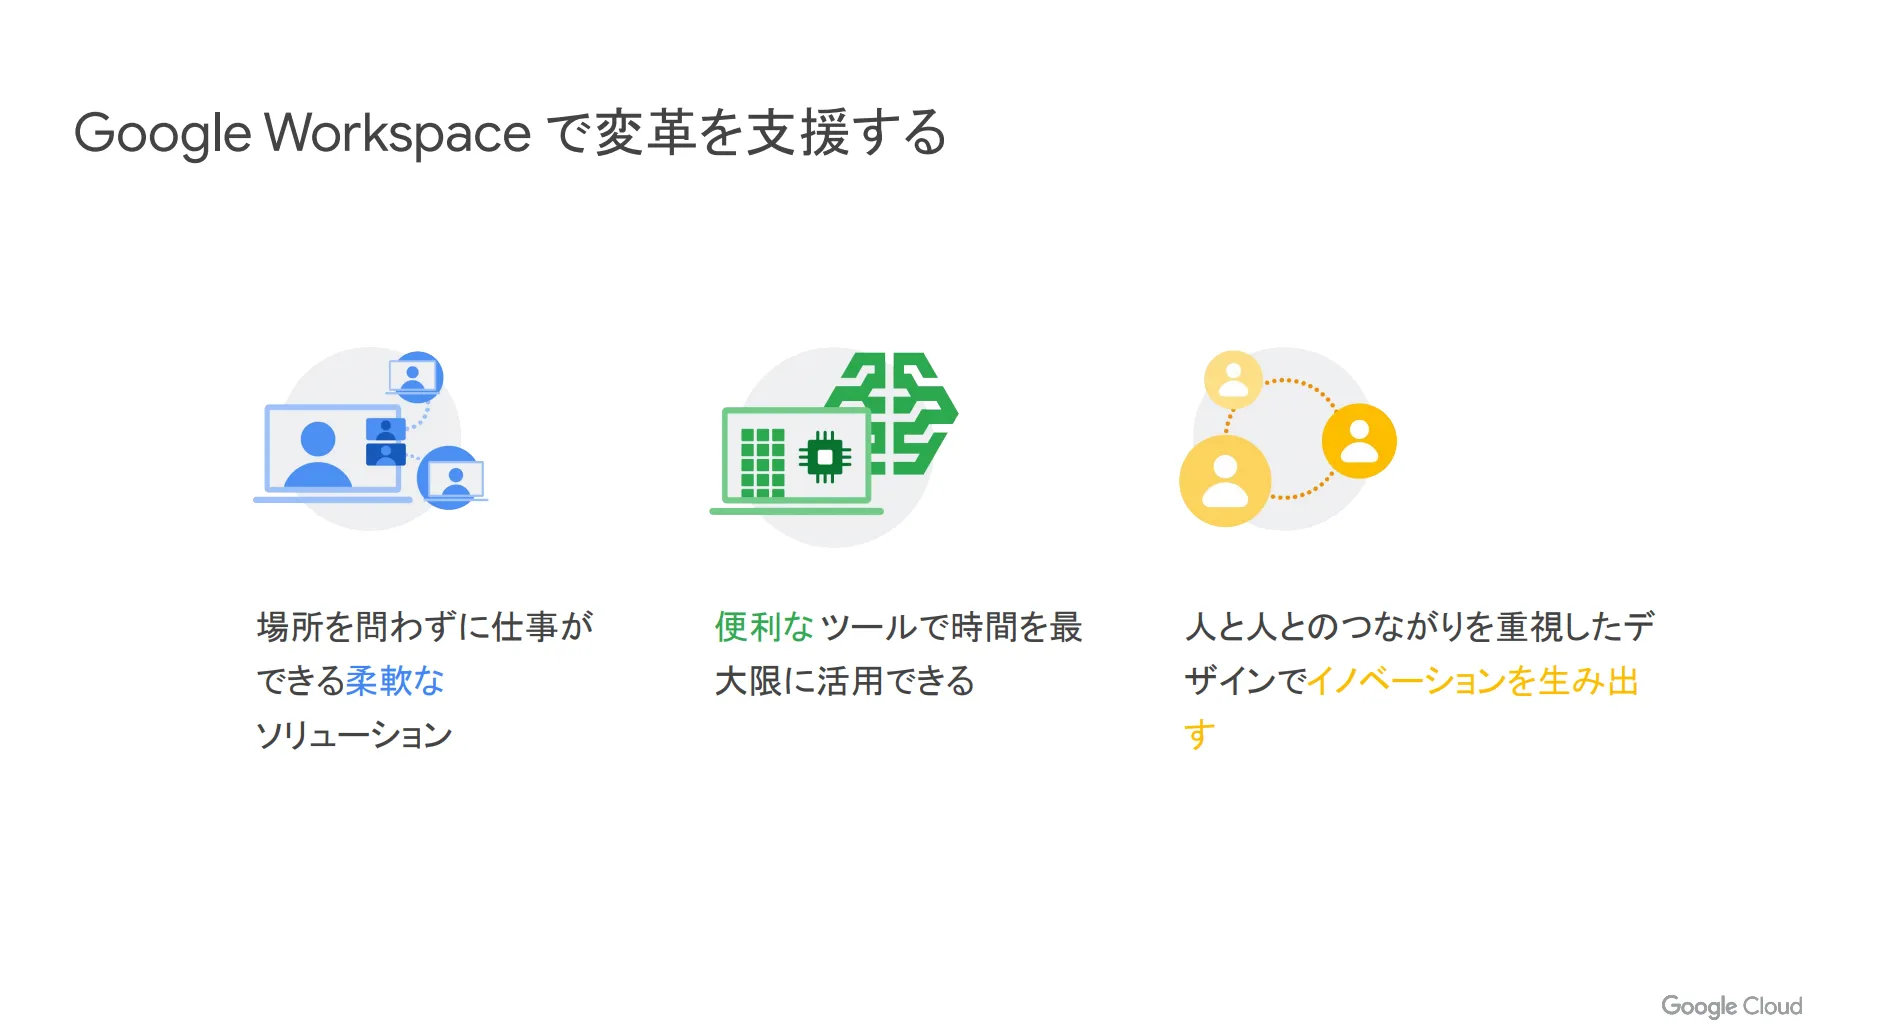 Google Workspace による変革支援